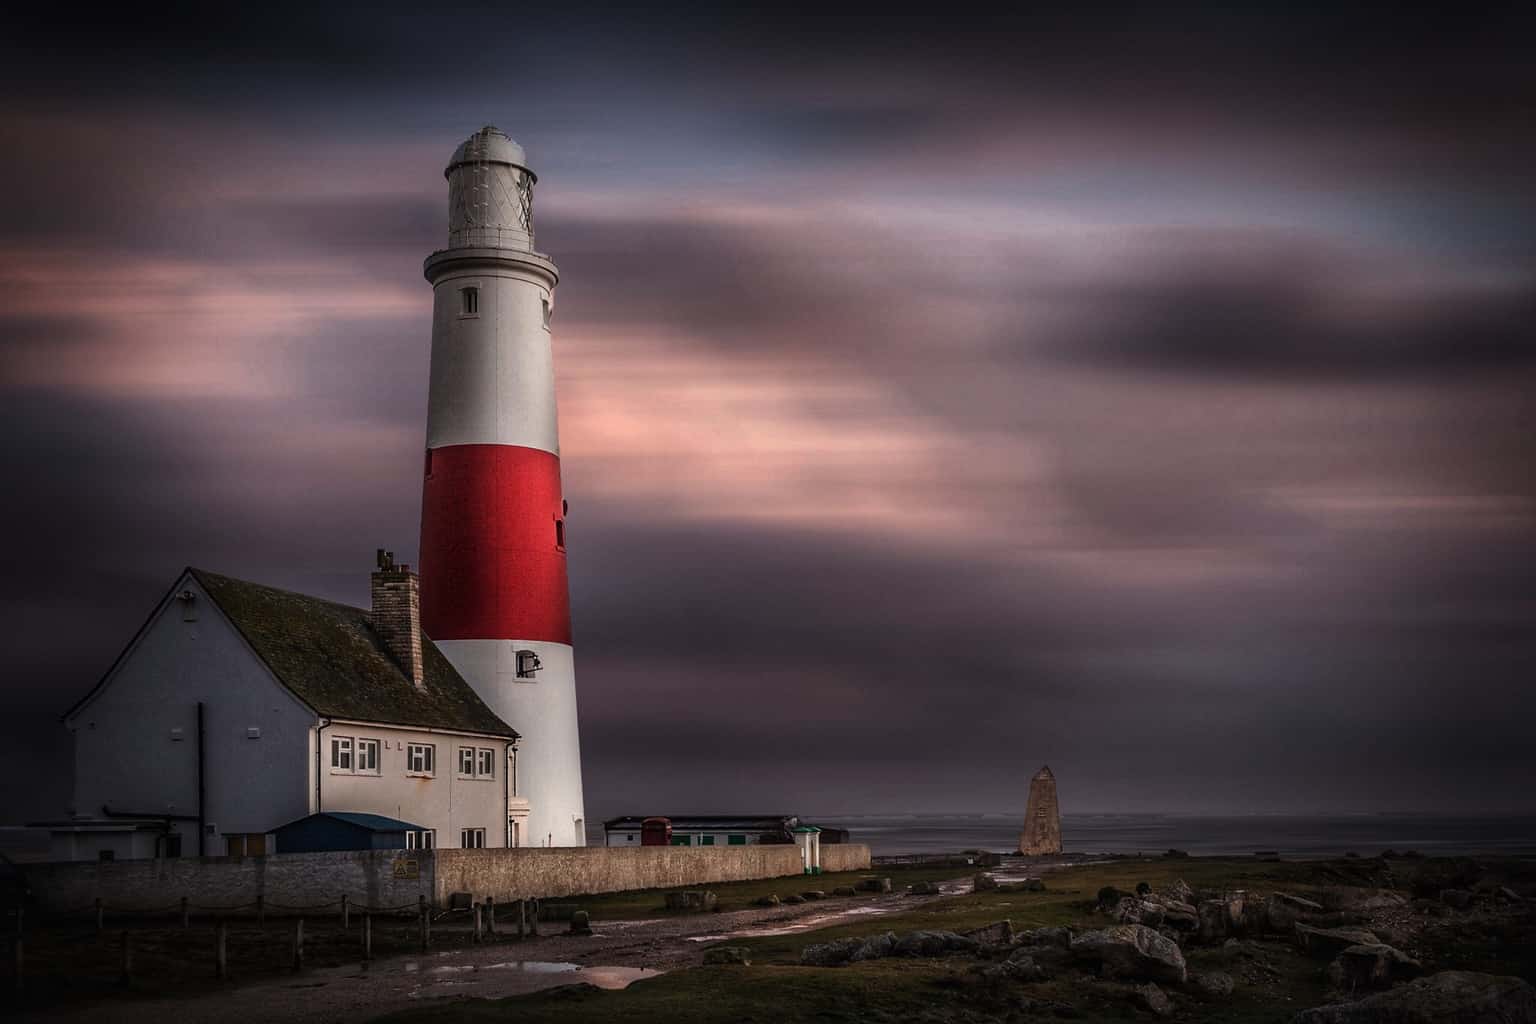  Portland Bill Lighthouse by Dorset Photographer Rick McEvoy 